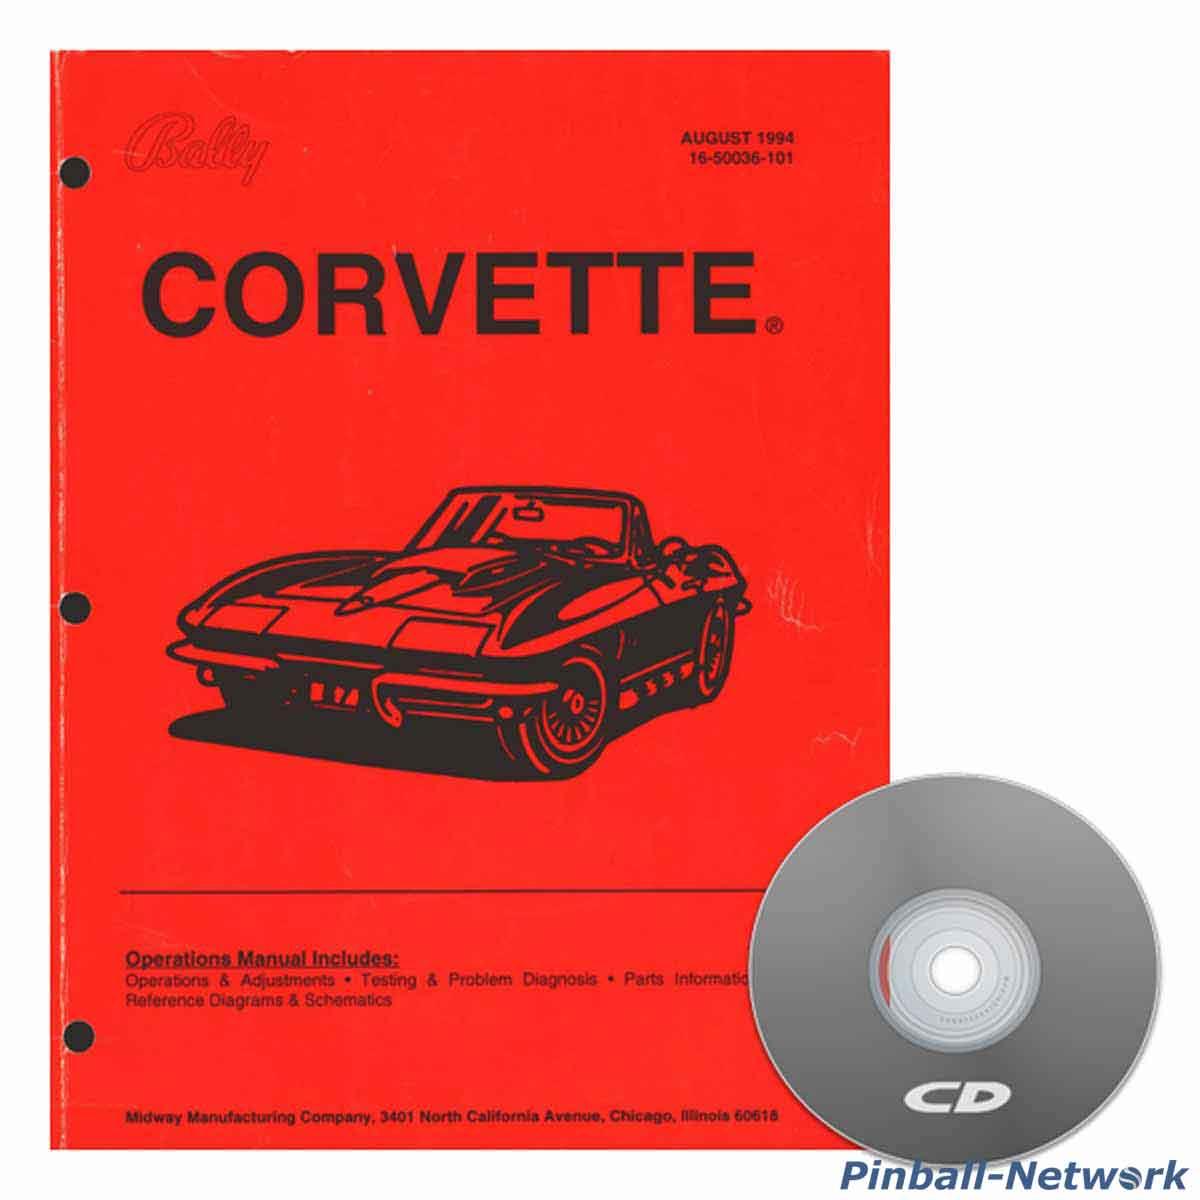 Corvette Operations Manual